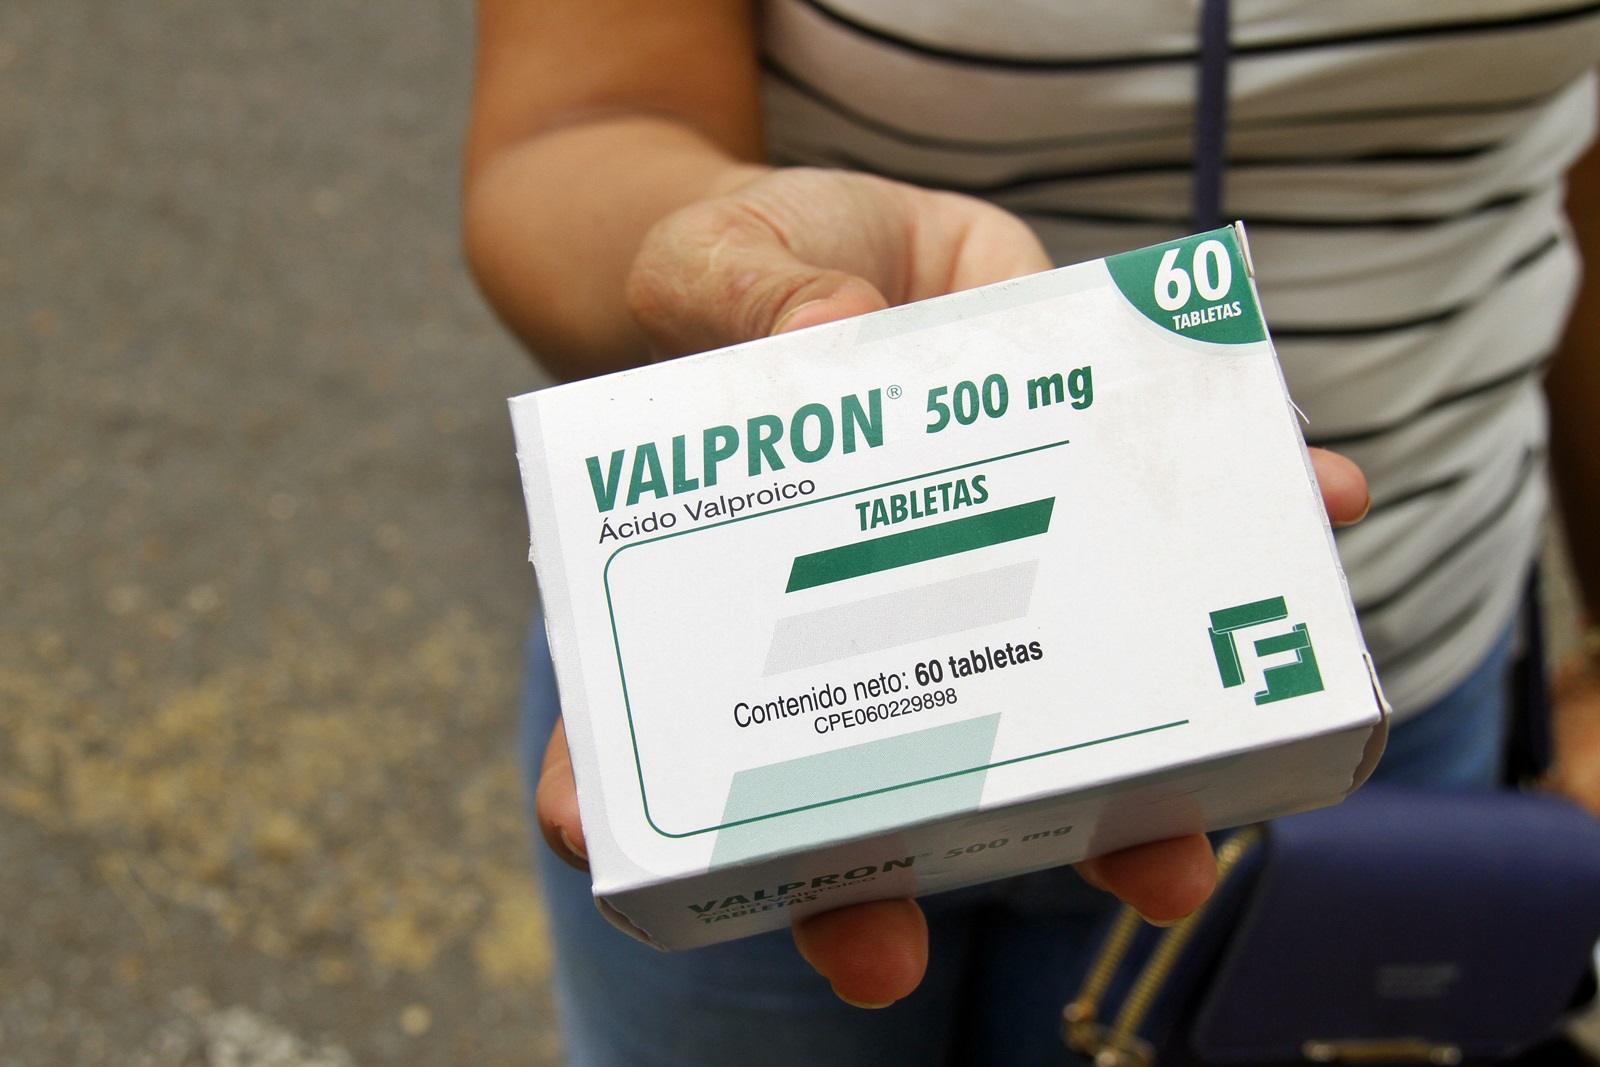 Escasez de medicamentos para la epilepsia preocupa a pacientes en Monagas